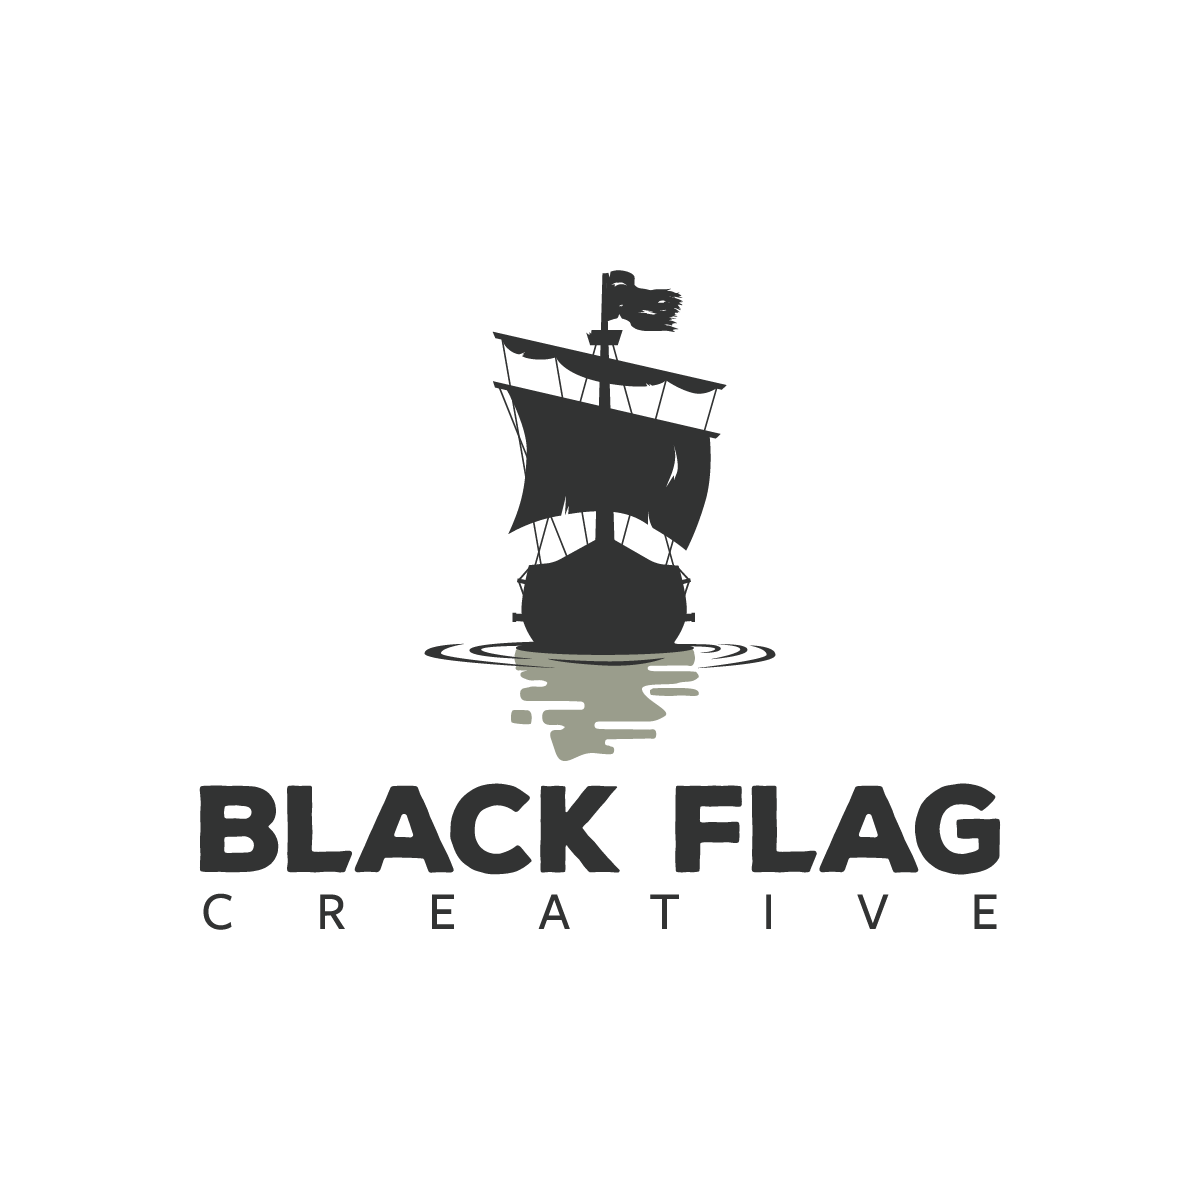 (c) Blackflagcreative.com